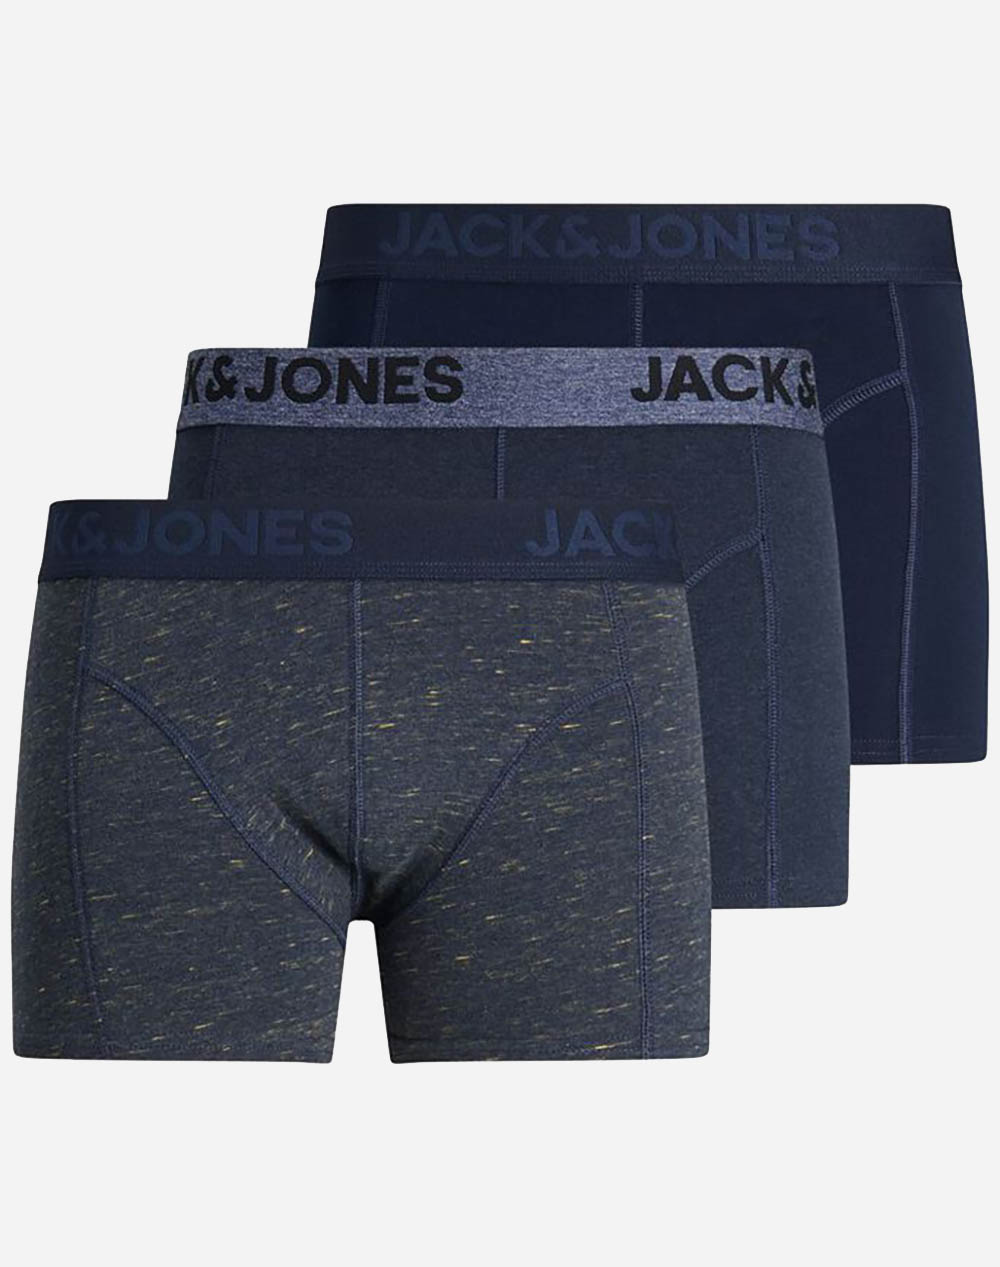 JACK&JONES ΜΠΟΞΕΡ JACJAMES TRUNKS 3 PACK NOOS 12184161-Navy Blazer DarkBlue